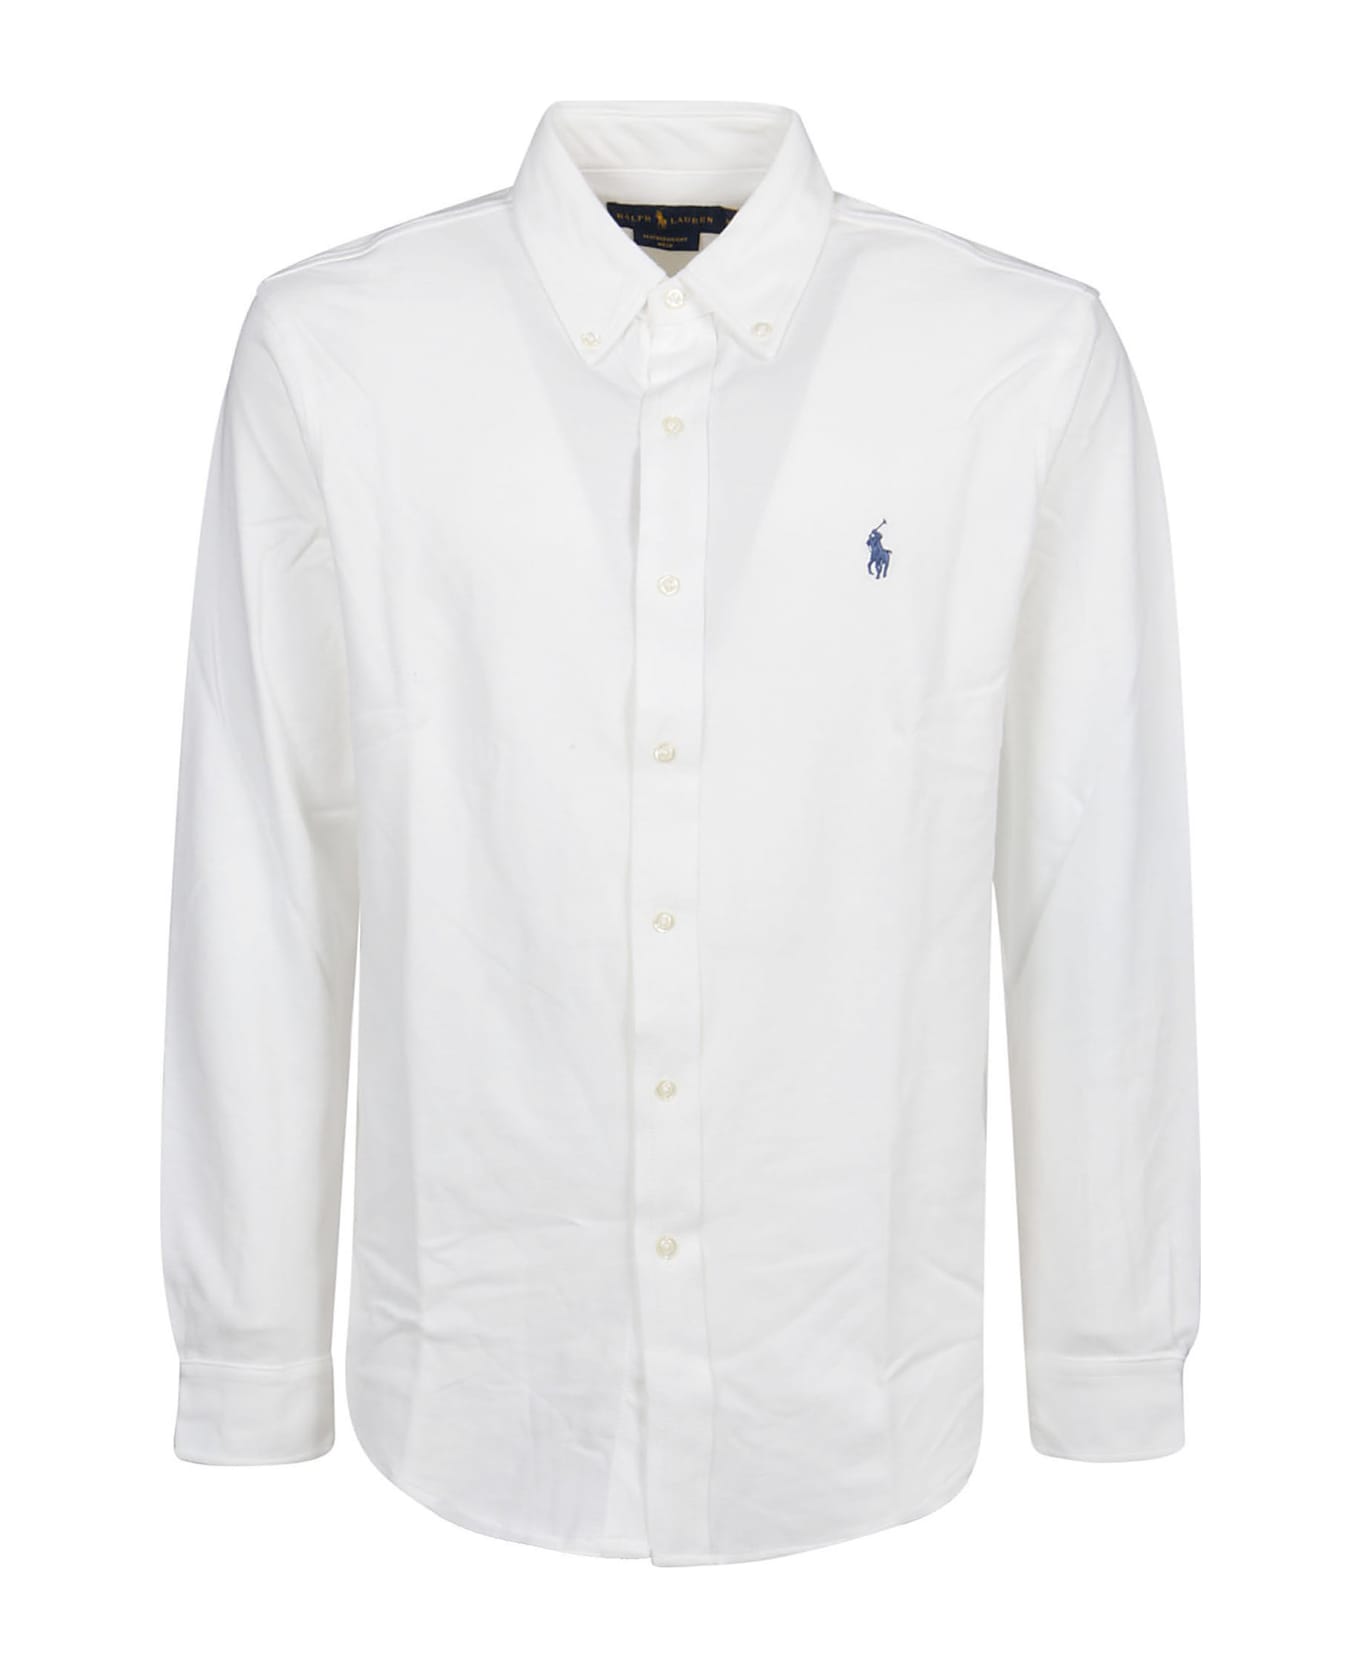 Polo Ralph Lauren Long Sleeve Shirt - White